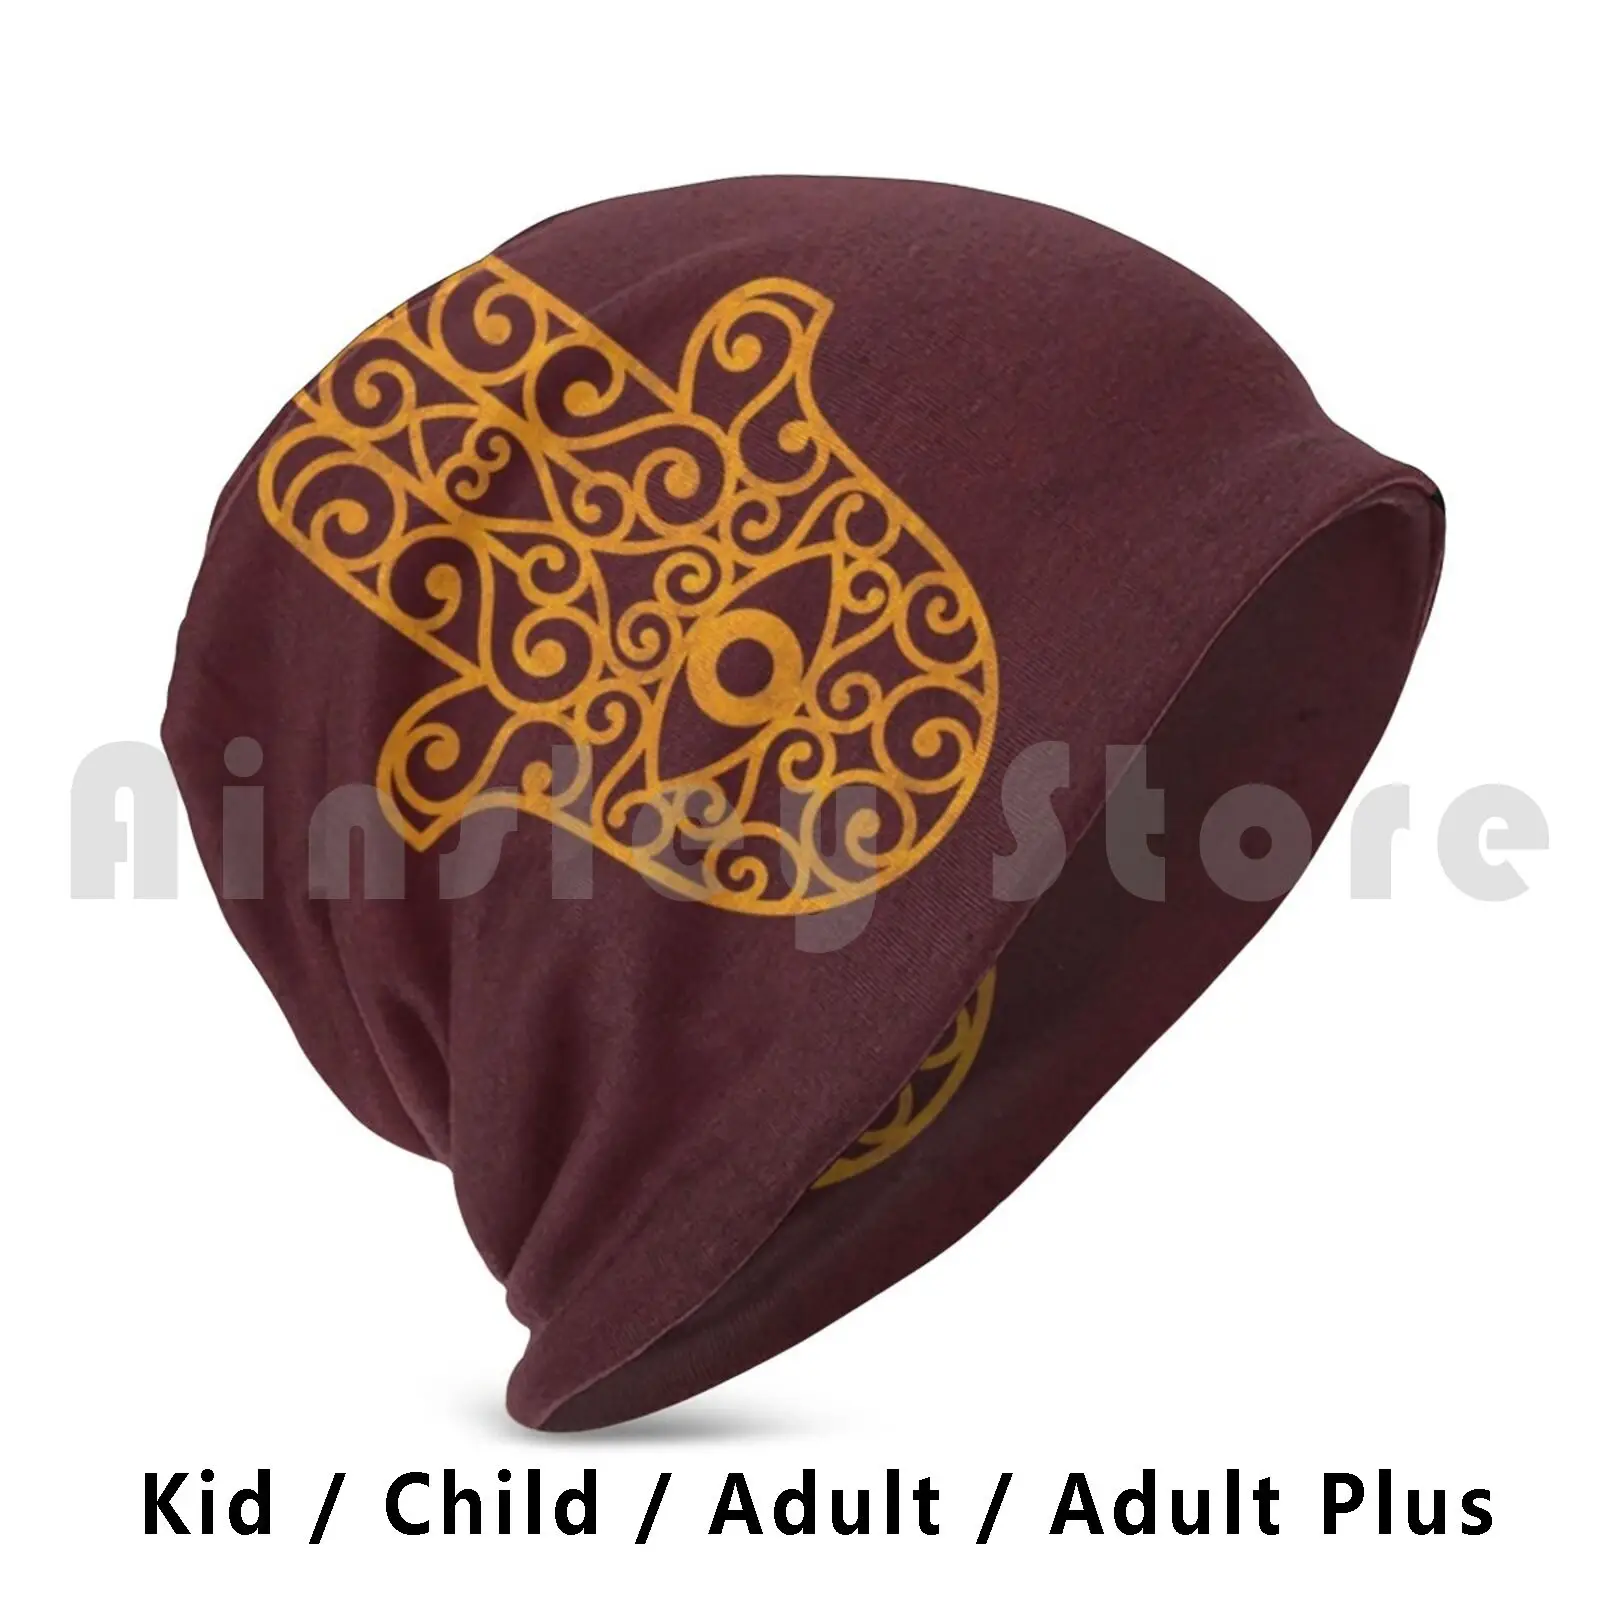 

Classic Golden Hamsa Symbol On Red Textile Beanies Knit Hat Hip Hop Arabic Hand Of Fatima Karma Zen Zen Buddhism